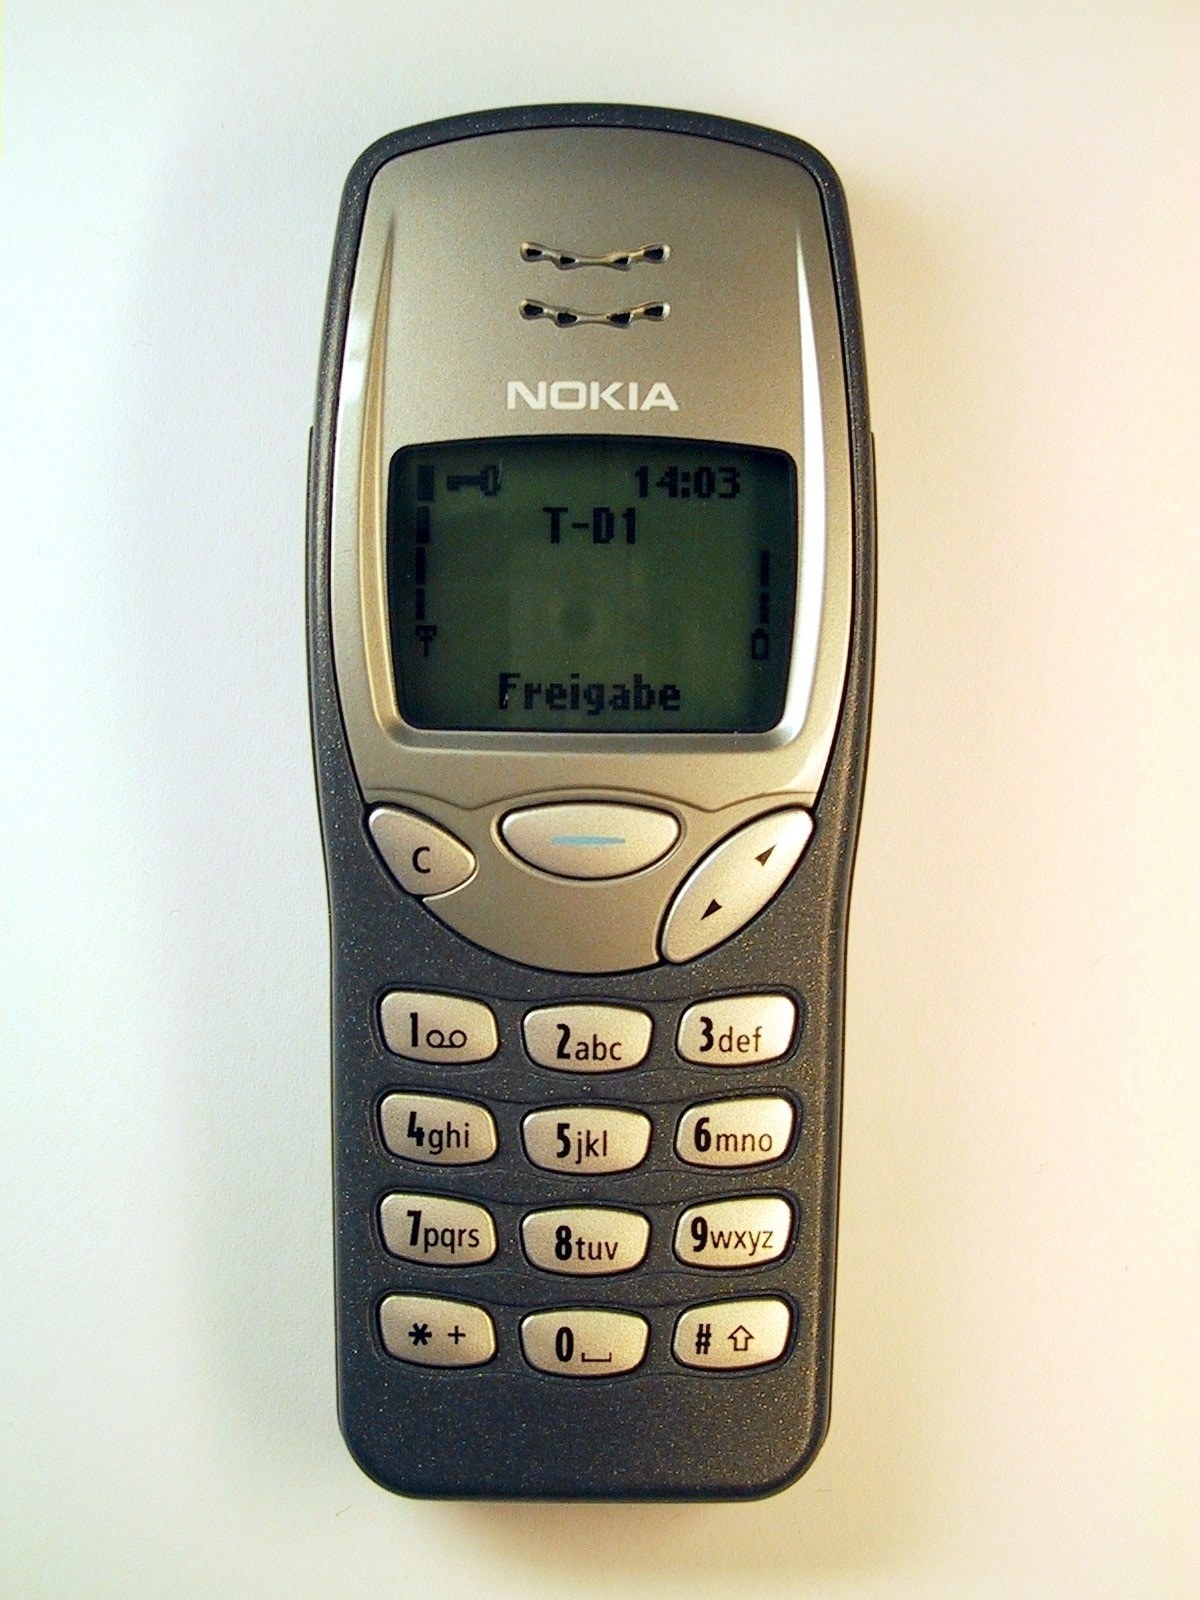 A Nokia phone